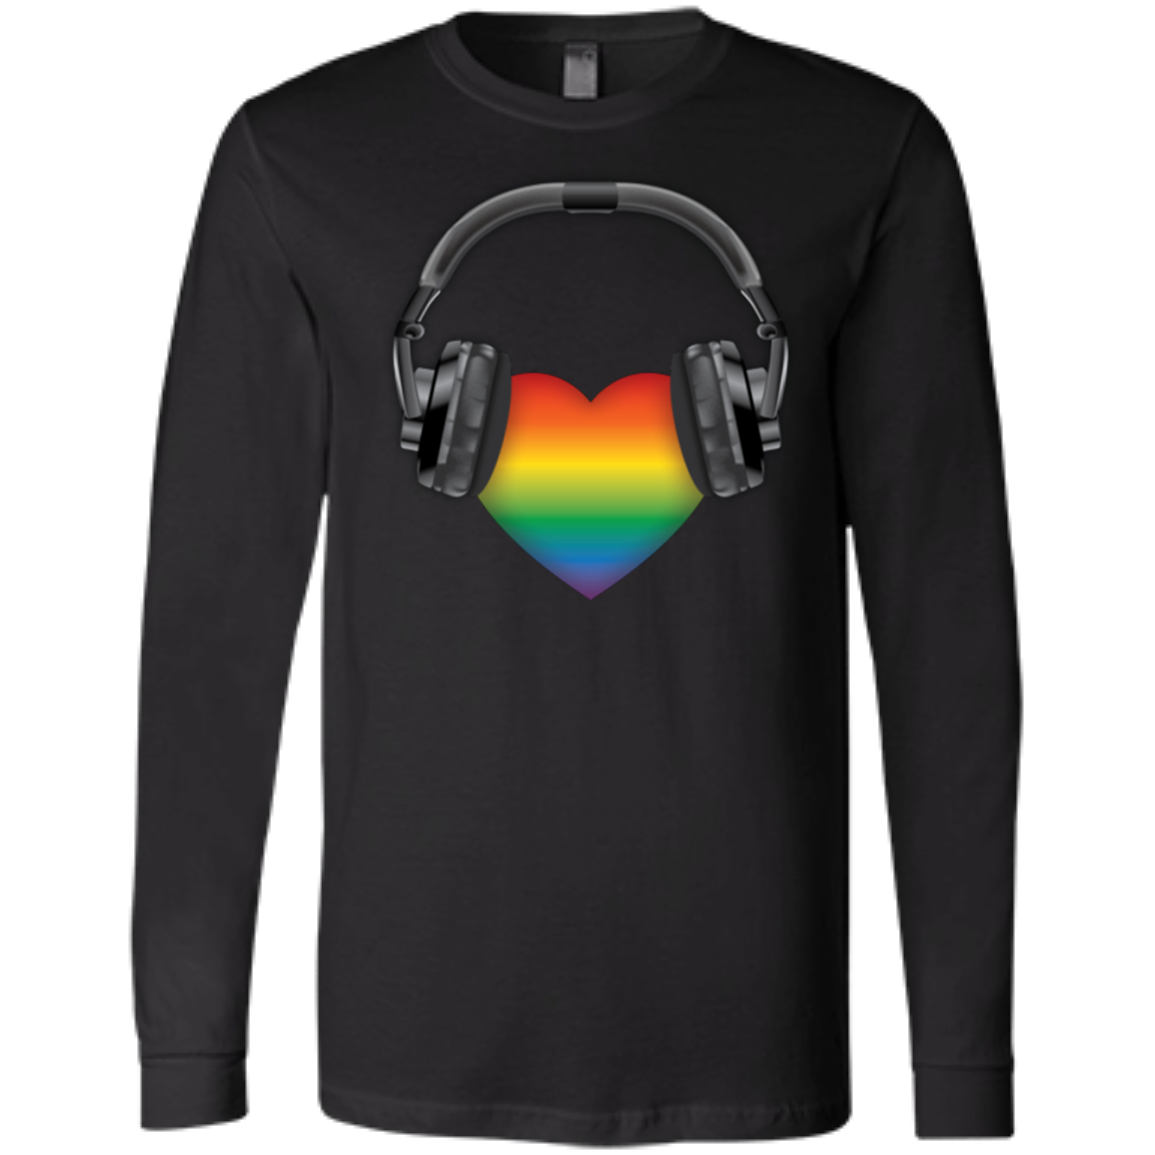 Listen to Your Heart LGBT Pride black full sleeves round neck tshirt for men